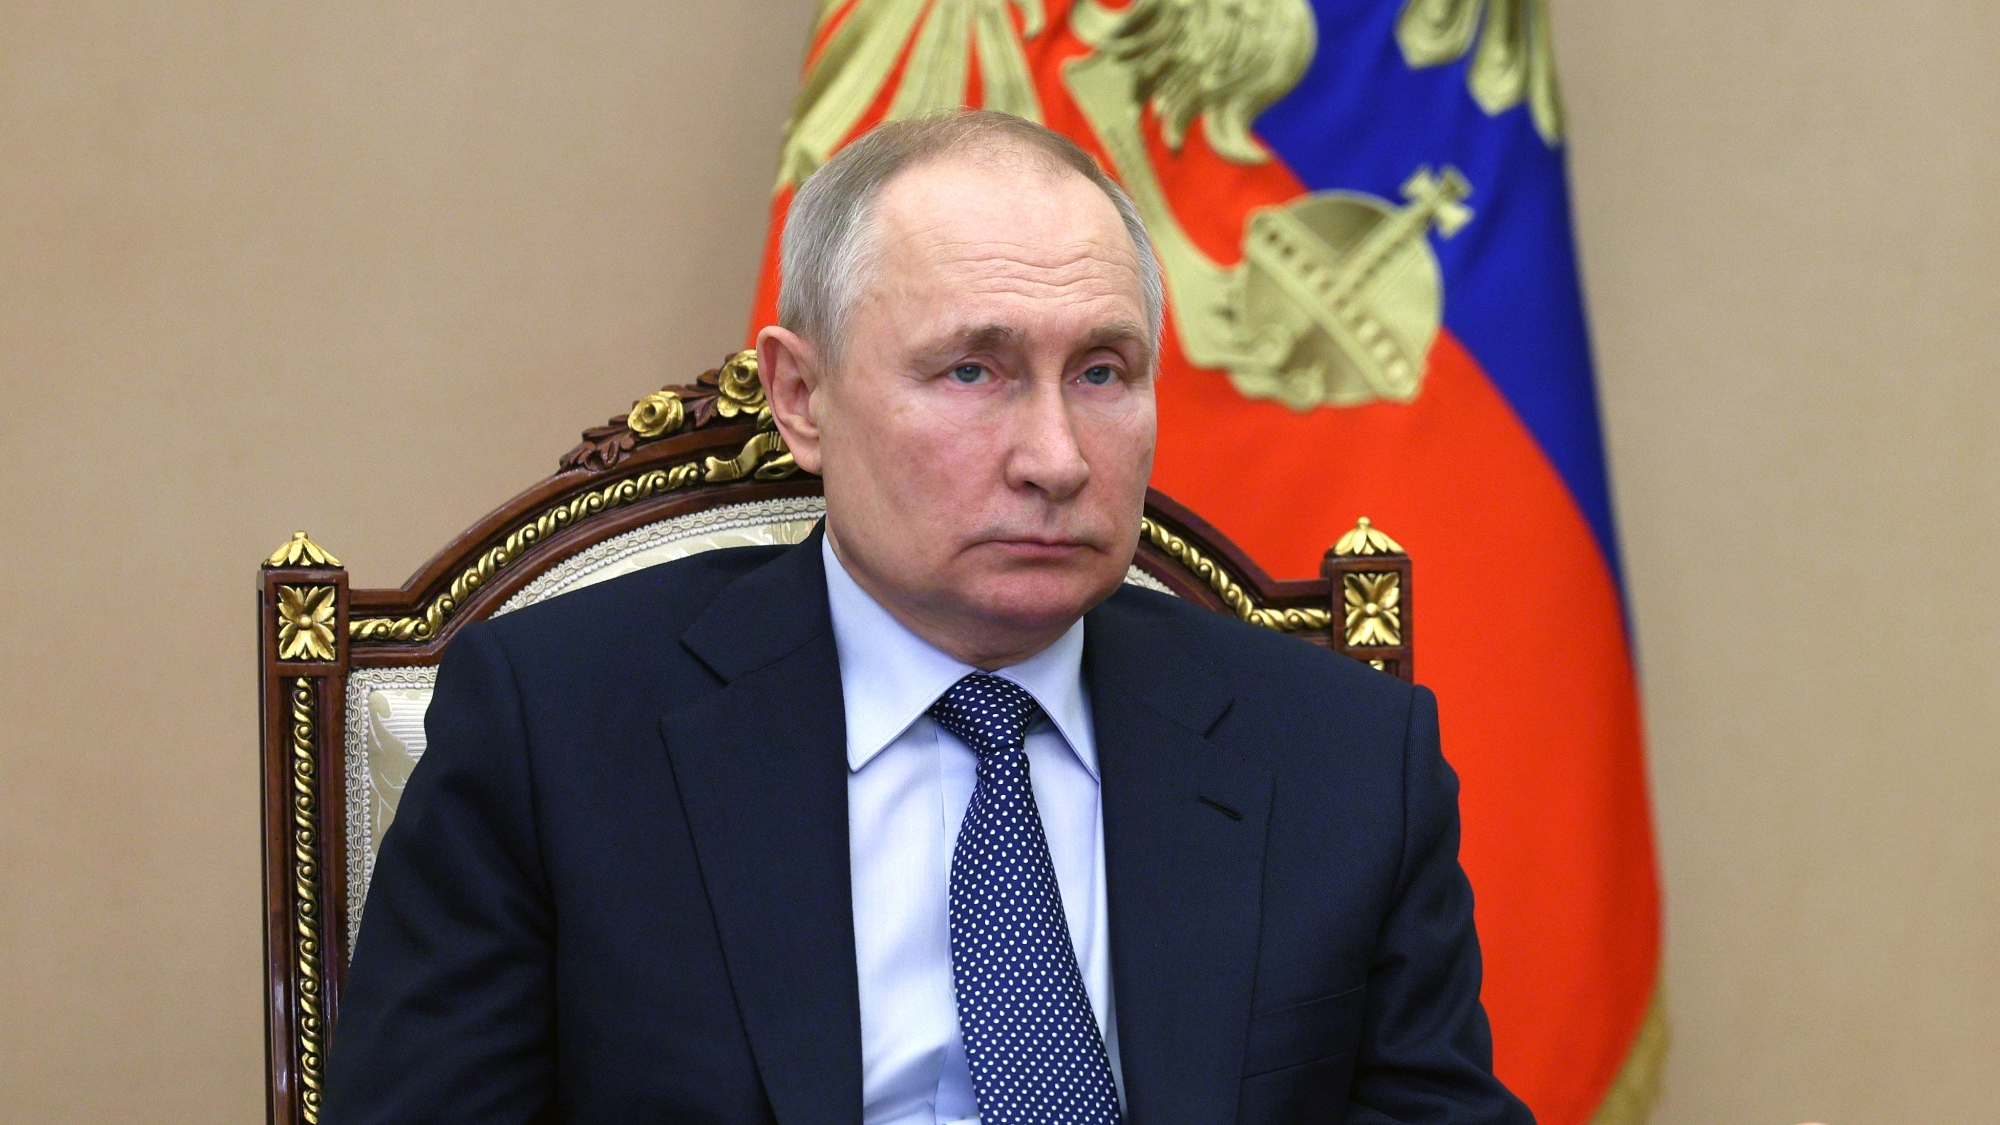 The president of russia is. Фото Путина. Политики России.